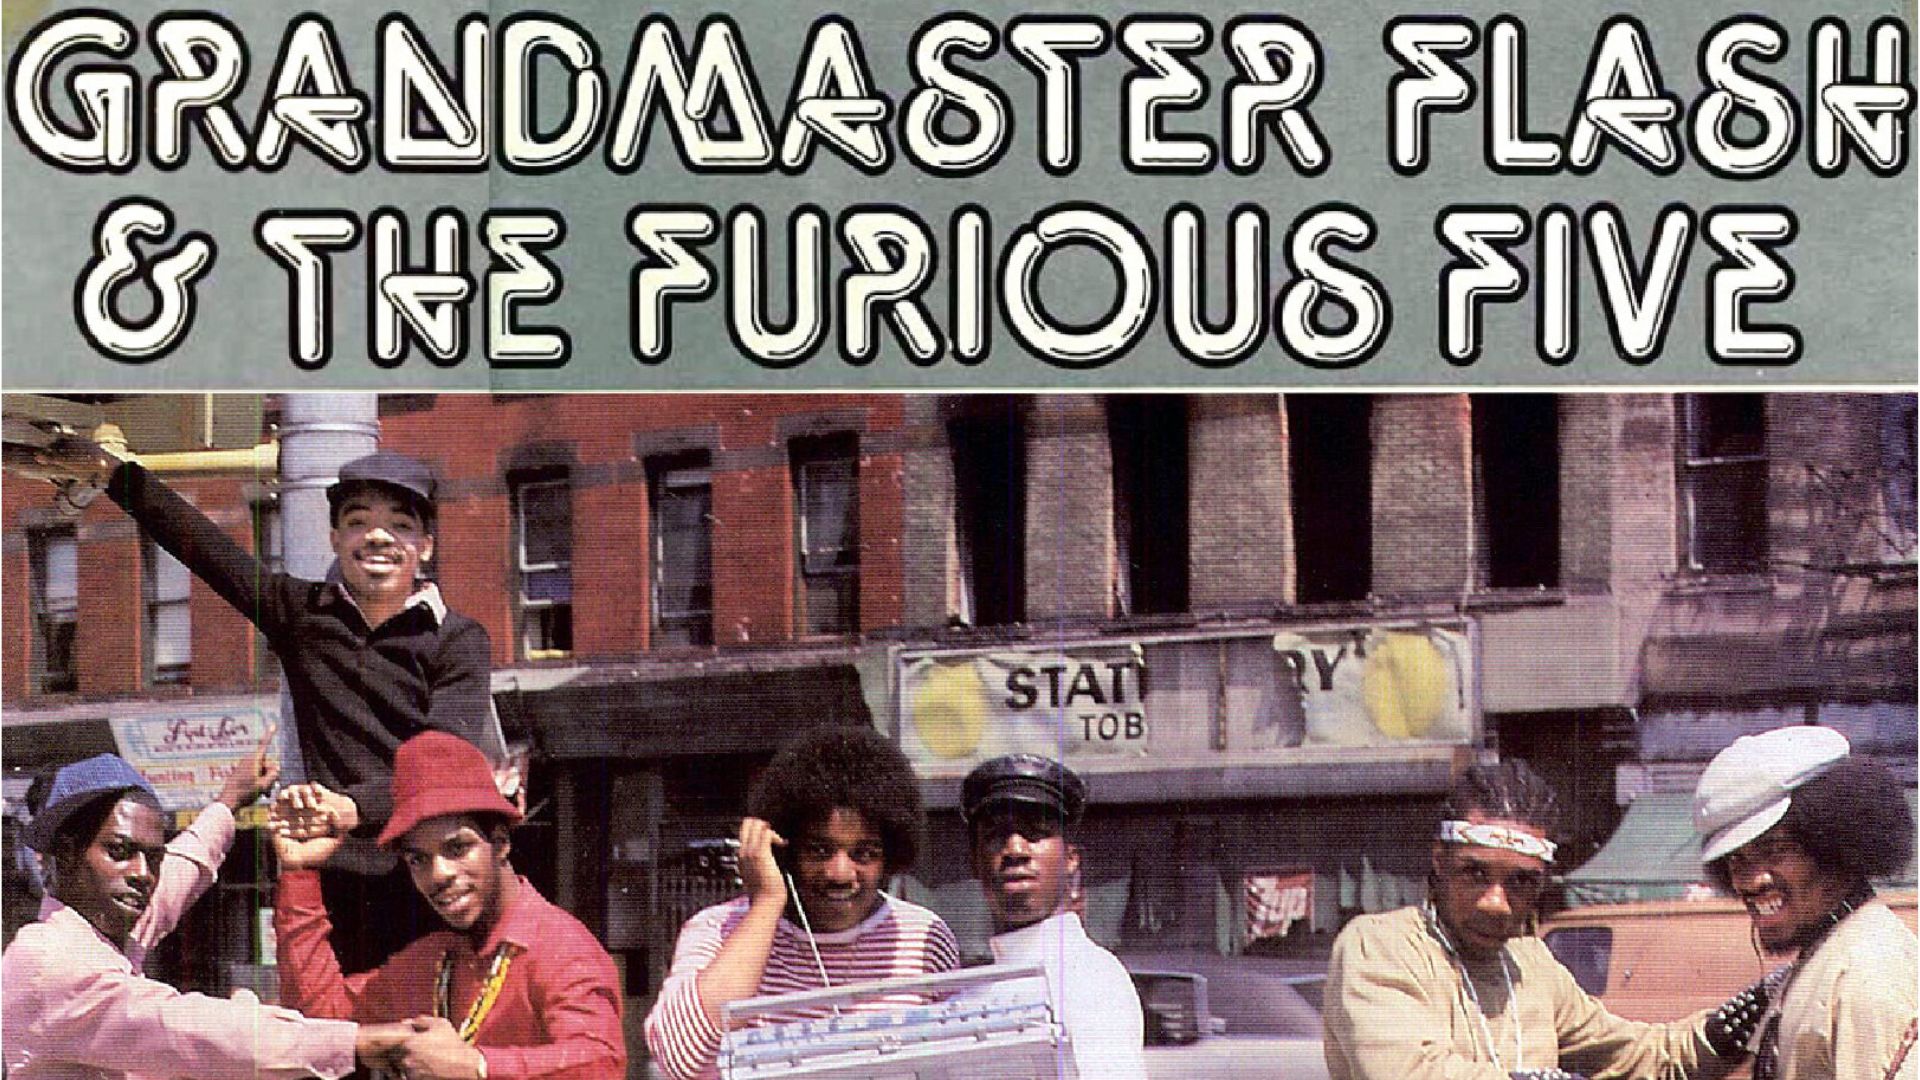 Grandmaster Flash & The Furious Five – The Message album art